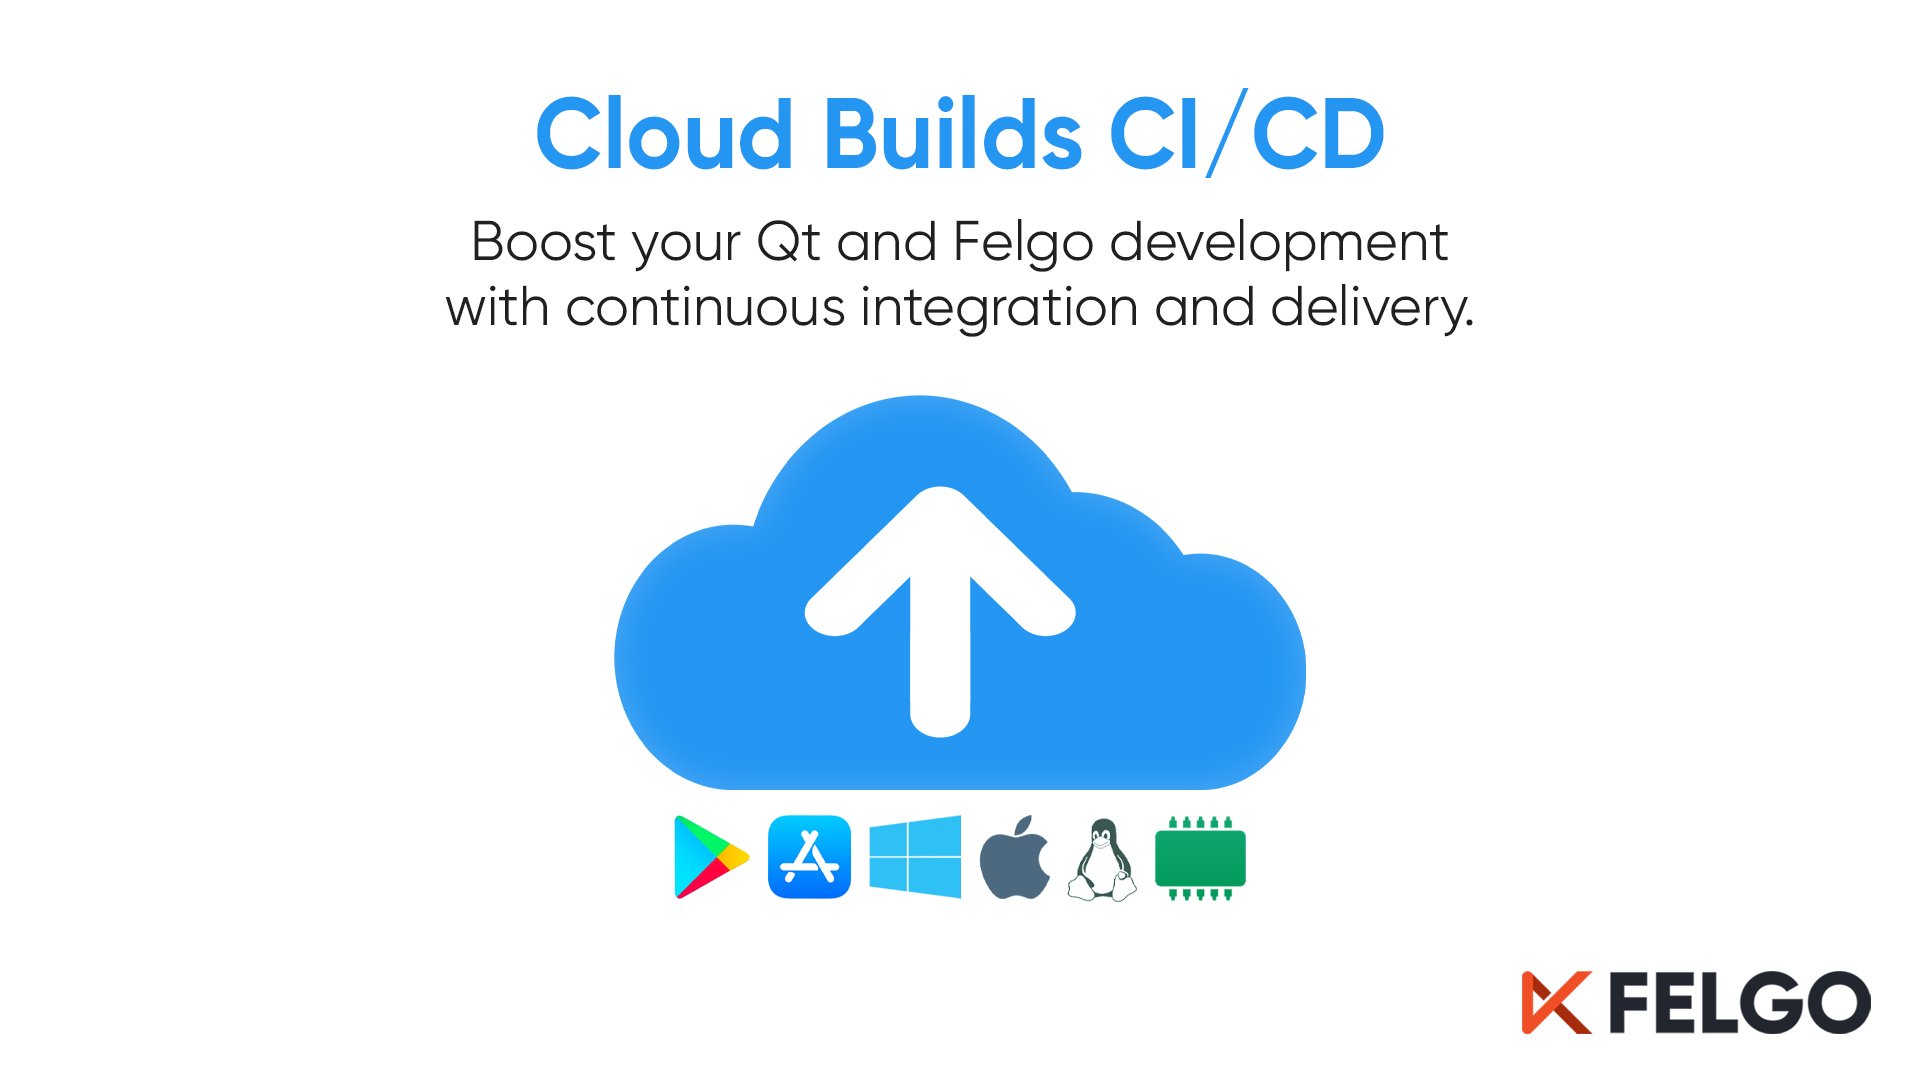 CloudBuildsGraphic - Felgo Cloud IDE